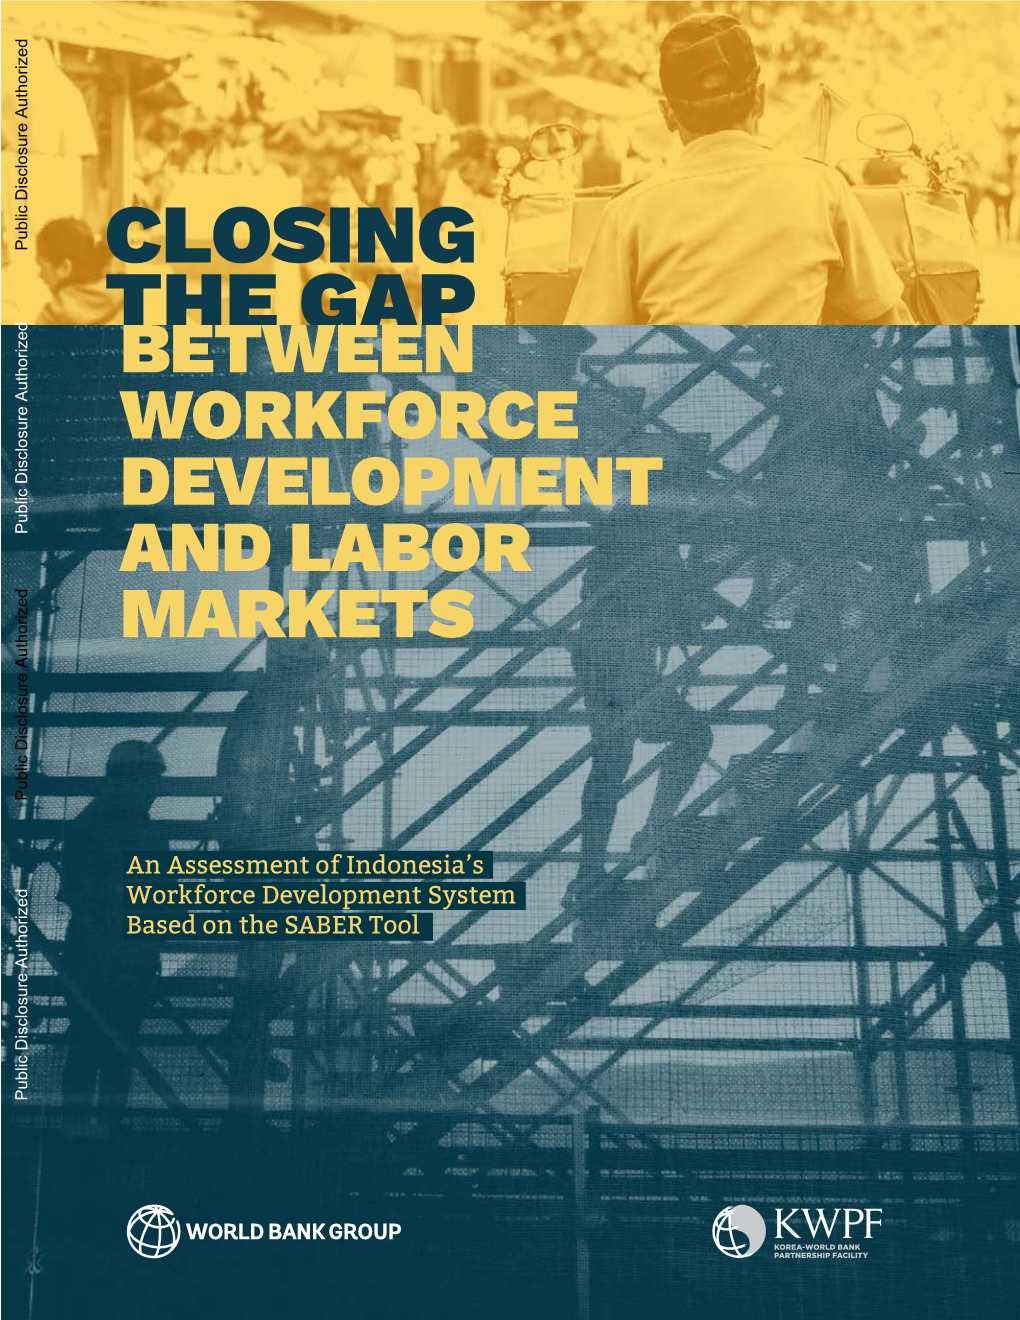 Between Workforce Development and Labor Markets